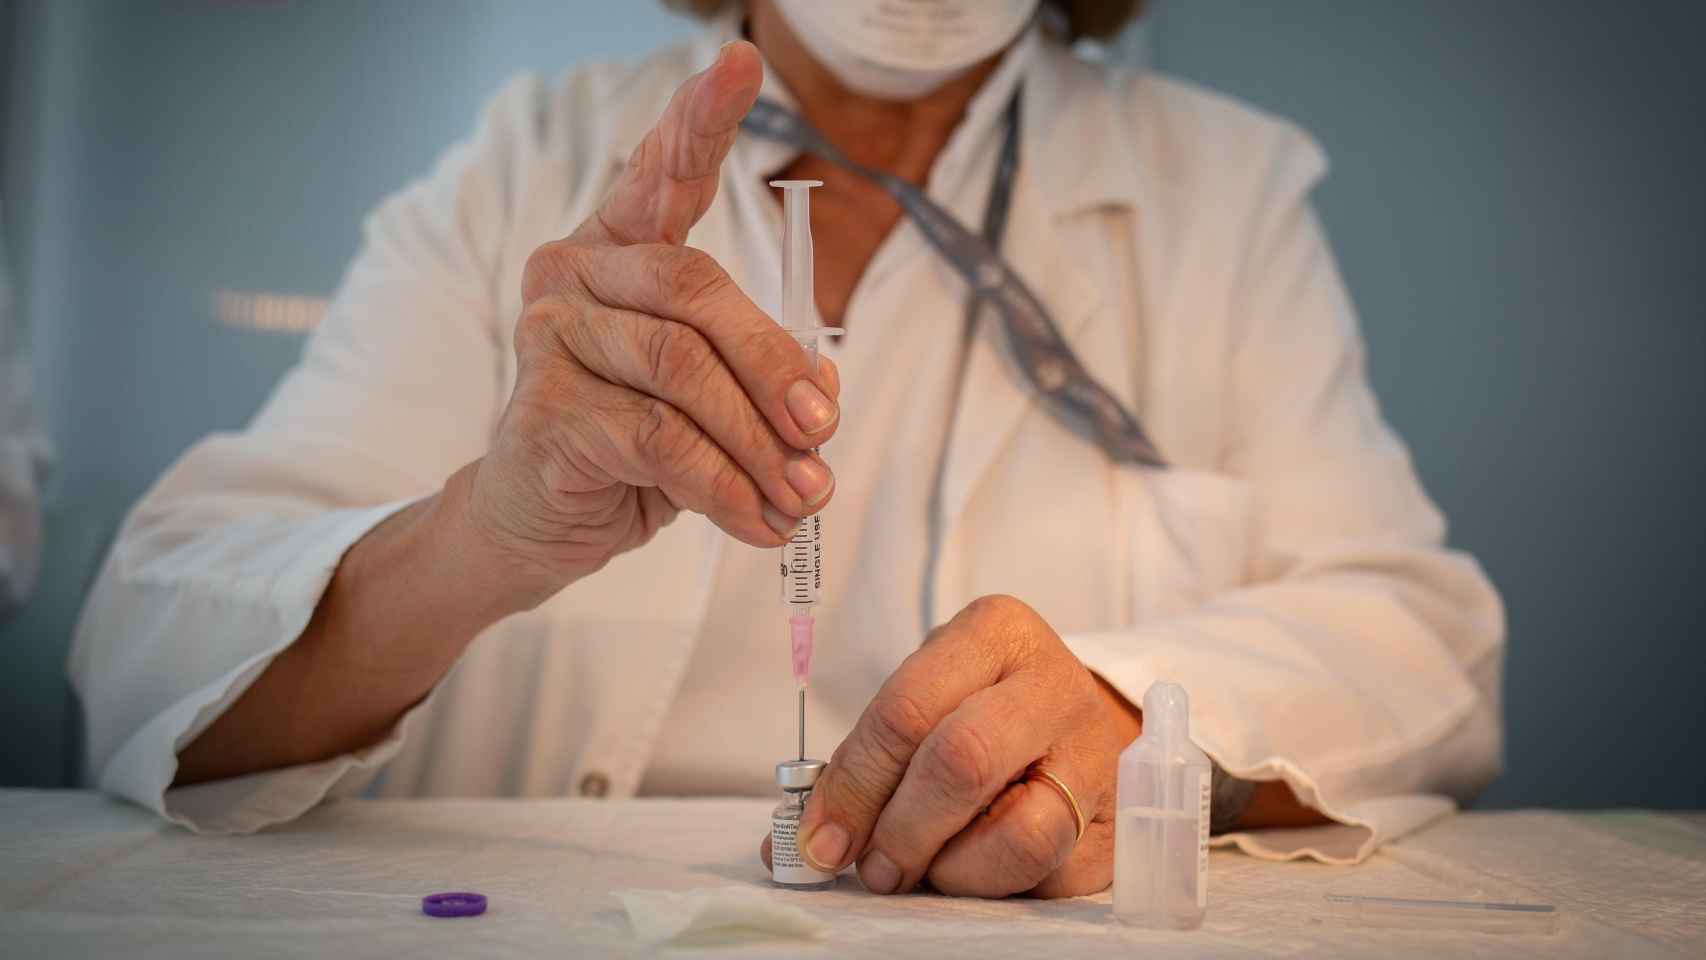 Una enfermera prepara una vacuna contra el Covid-19 antes de administrársela a un profesional sanitario en el Hospital de la Santa Creu i Sant Pau de Barcelona / EUROPA PRESS